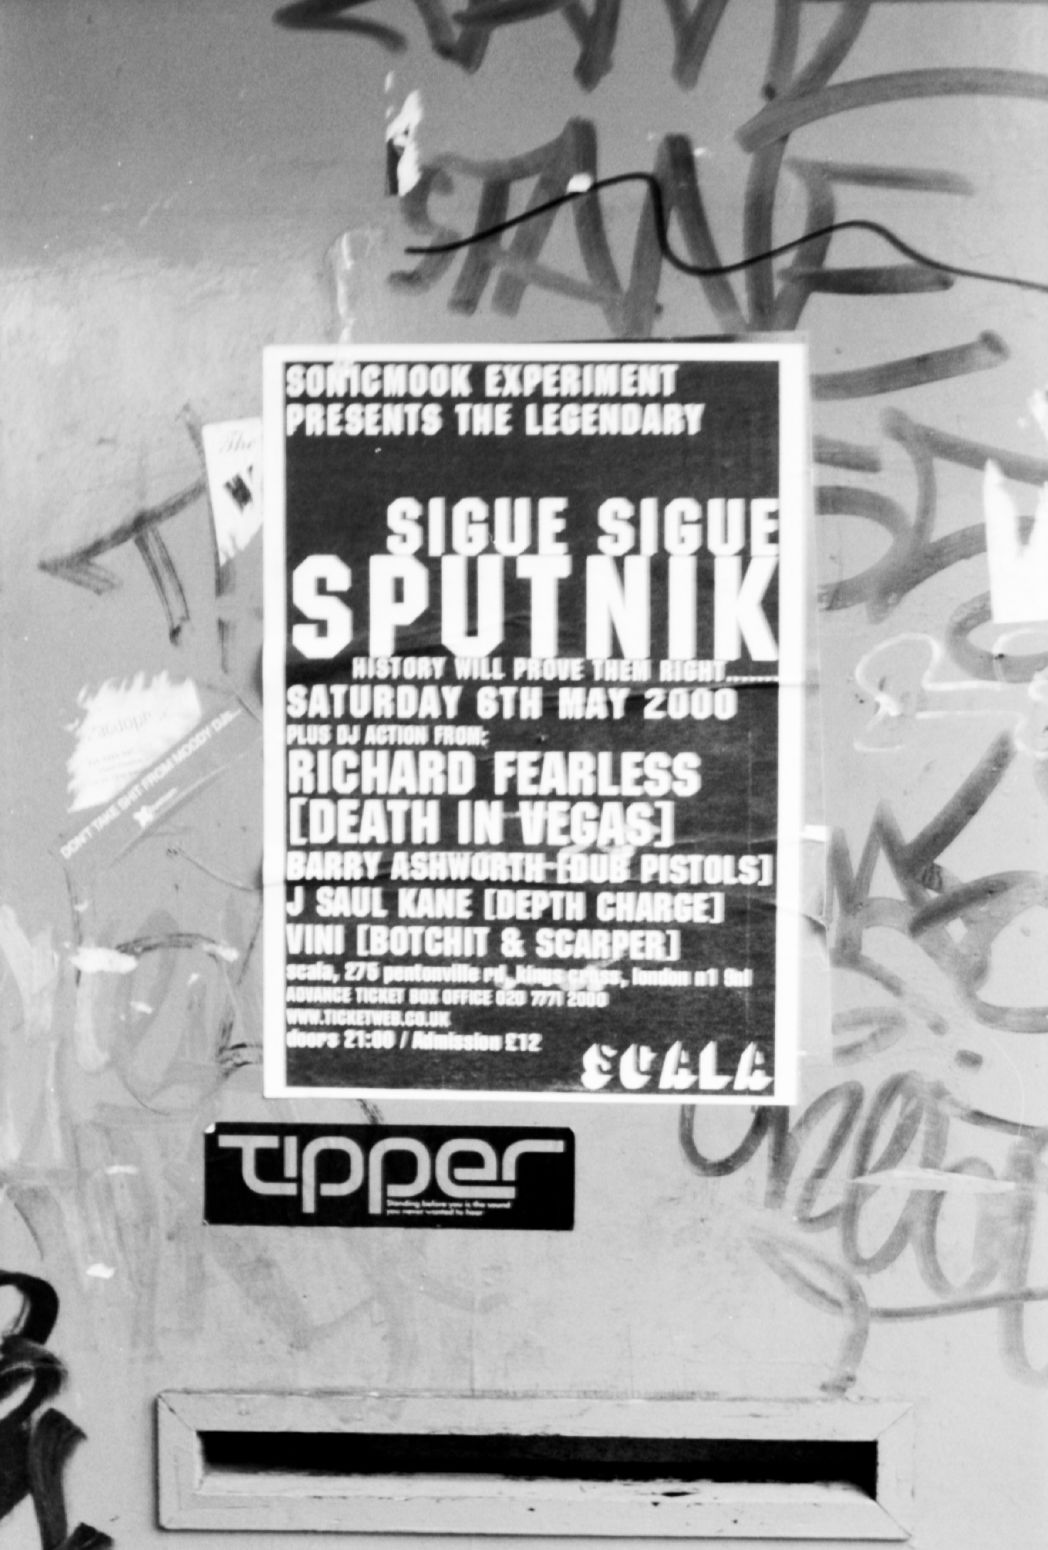 Sigue Sigue Sputnik. Portobello Market, London, England. April 2000